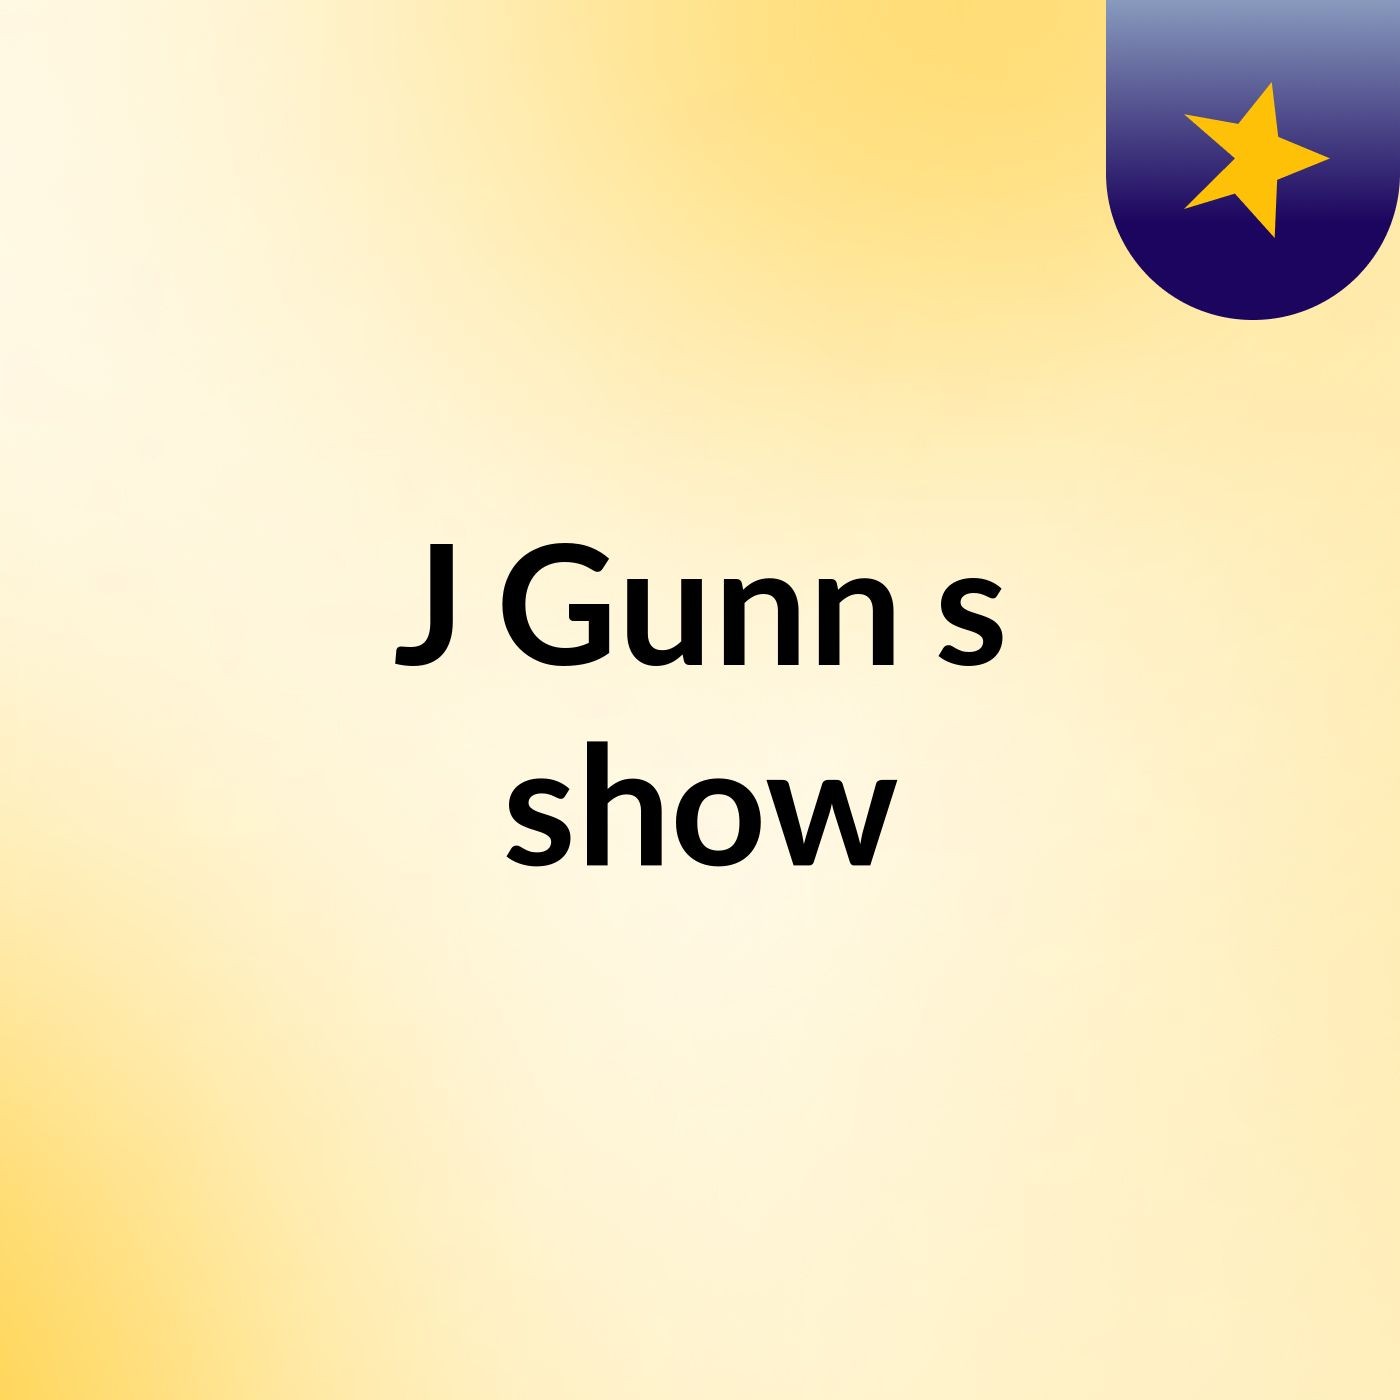 J Gunn's show